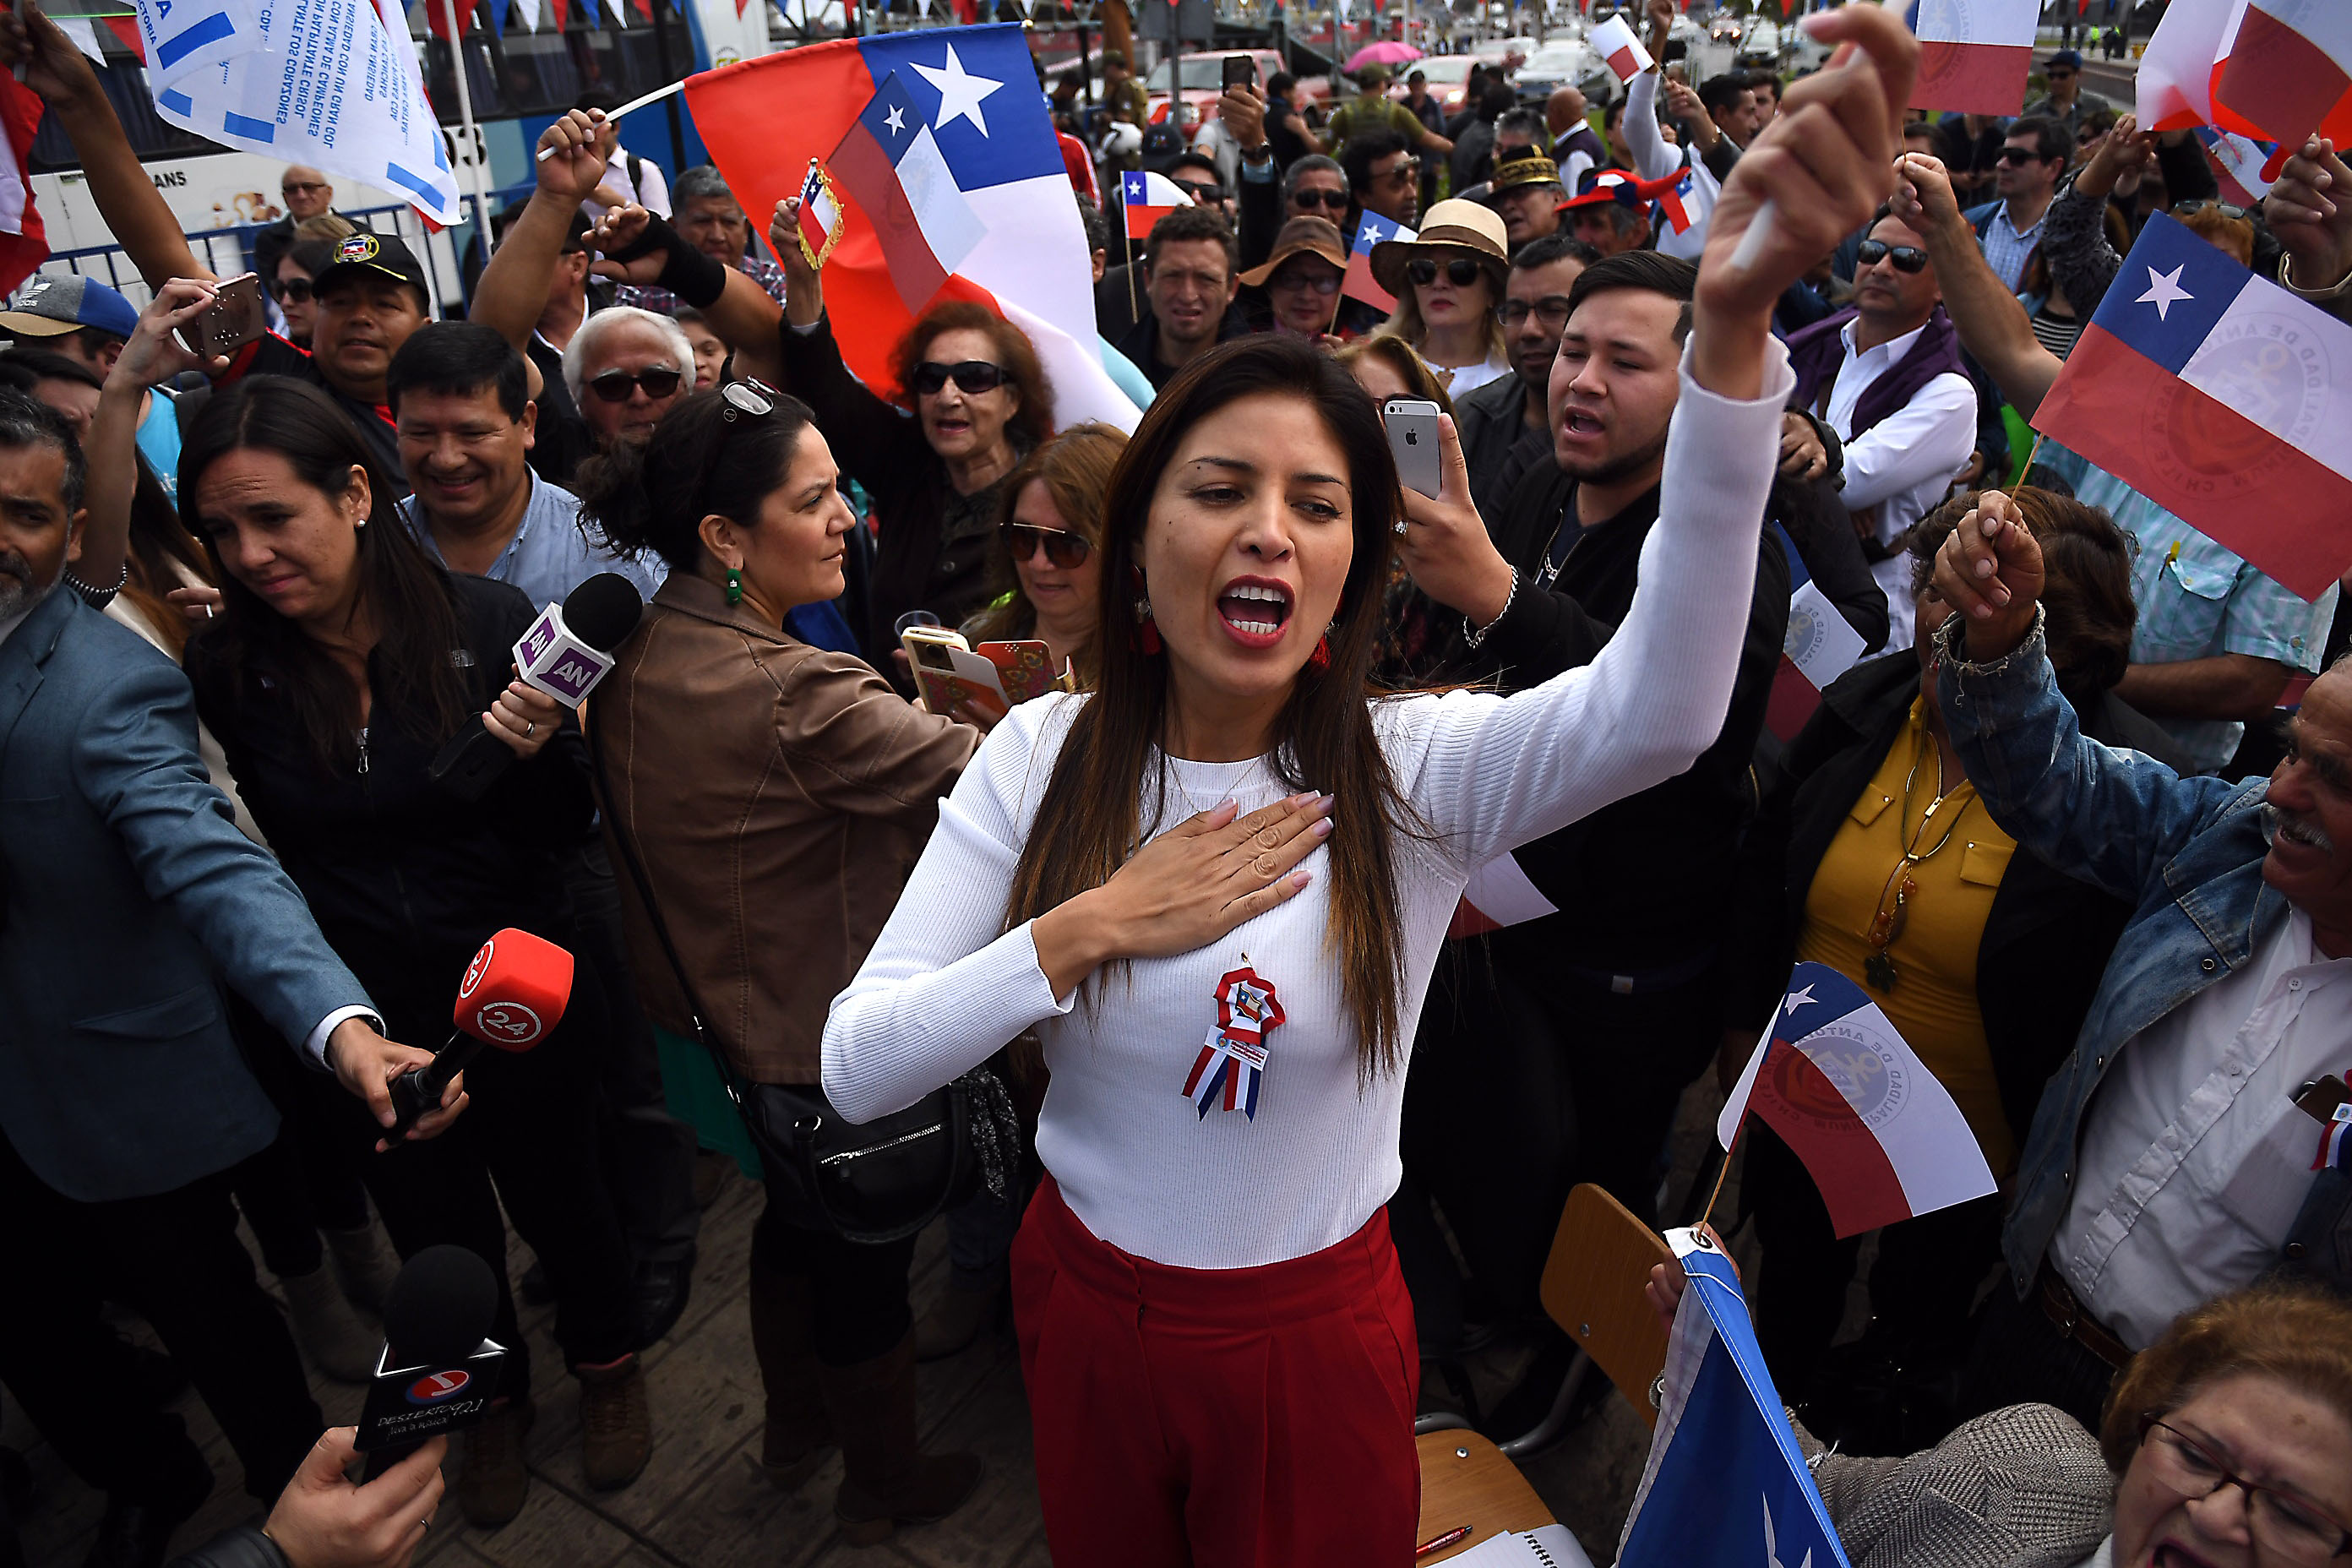 The major of Antofagasta, Karen Rojo, celebrates the CIJ's verdict. She had called for citizens to raise their flags in support of the country's delegation. Camilo Alfaro | Agencia UNO